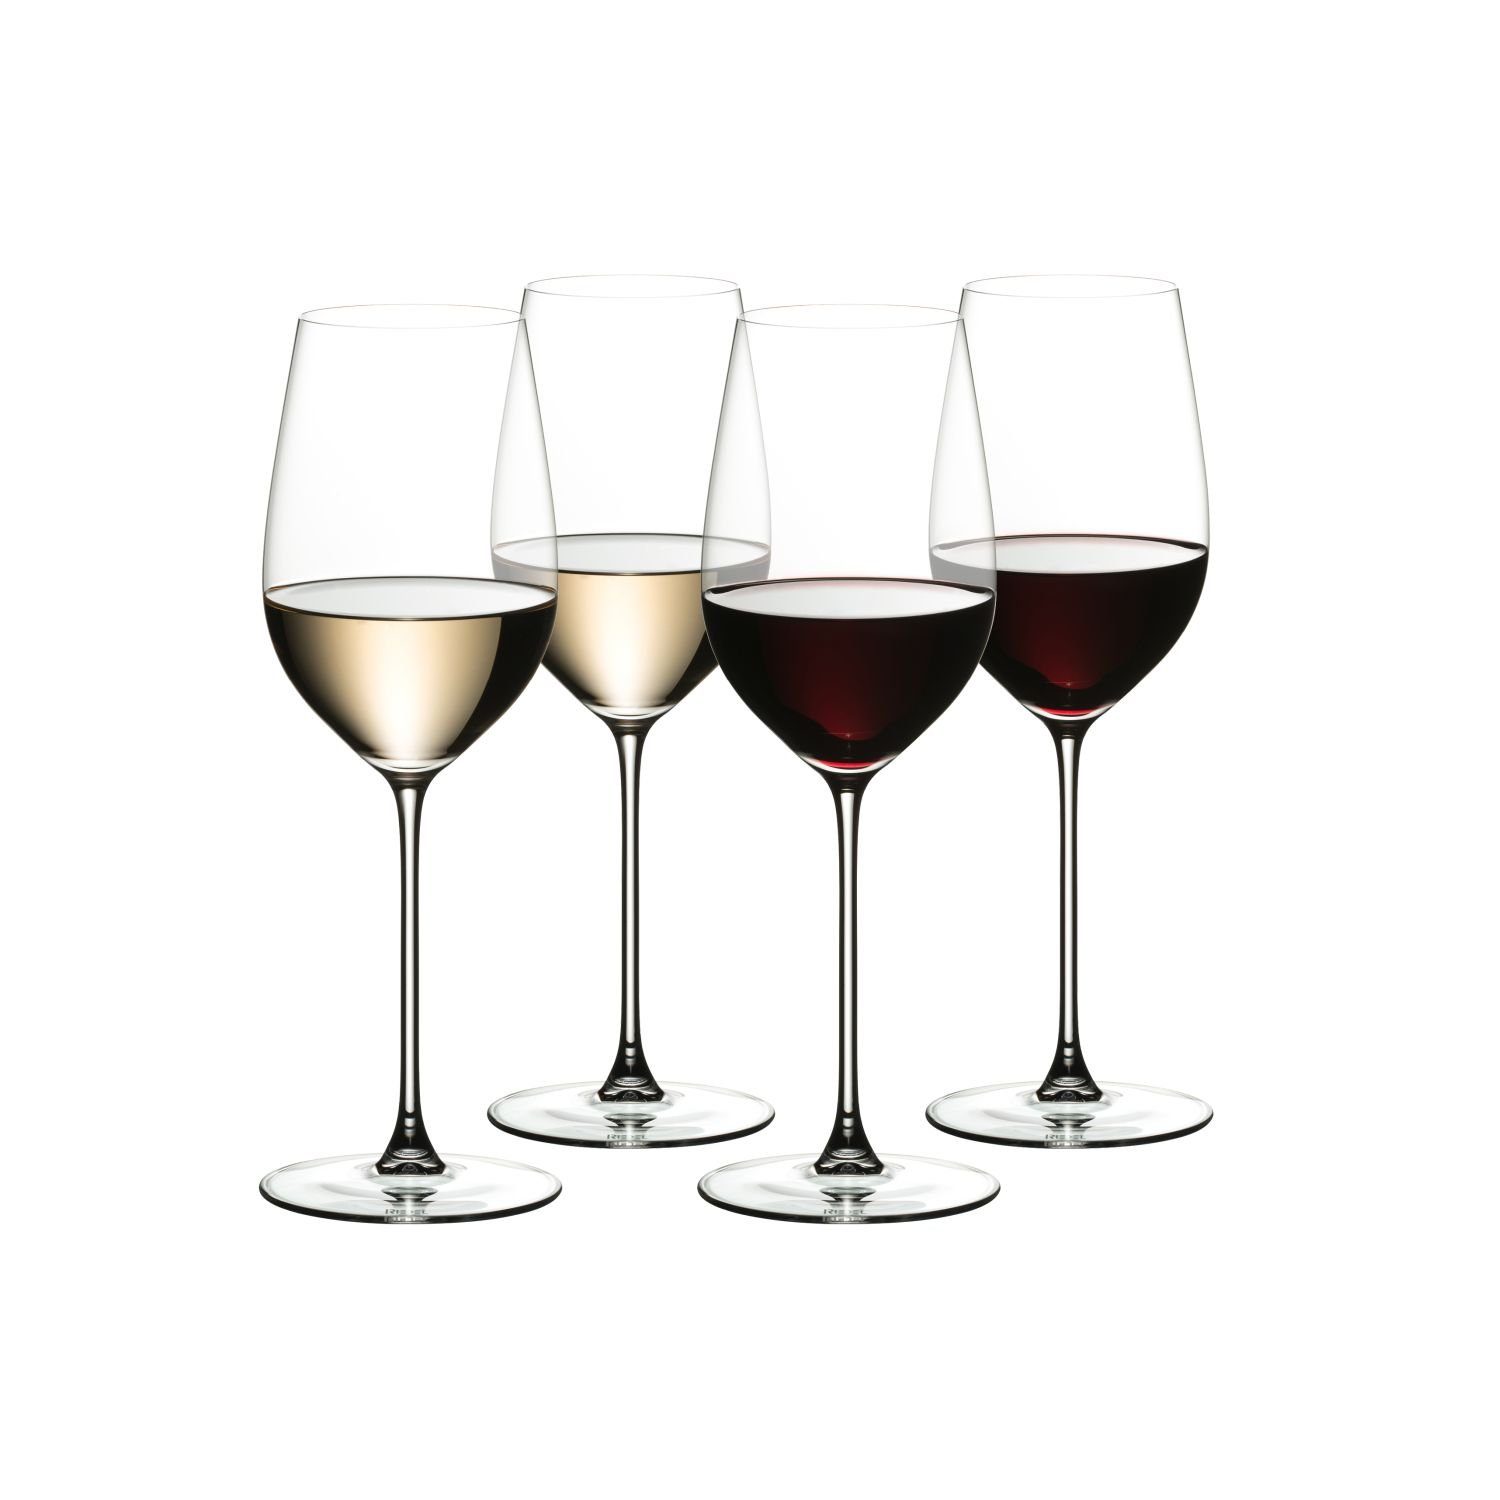 RIEDEL THE WINE GLASS COMPANY Weinglas Veritas Riesling Zinfandel 4er Set, Kristallglas